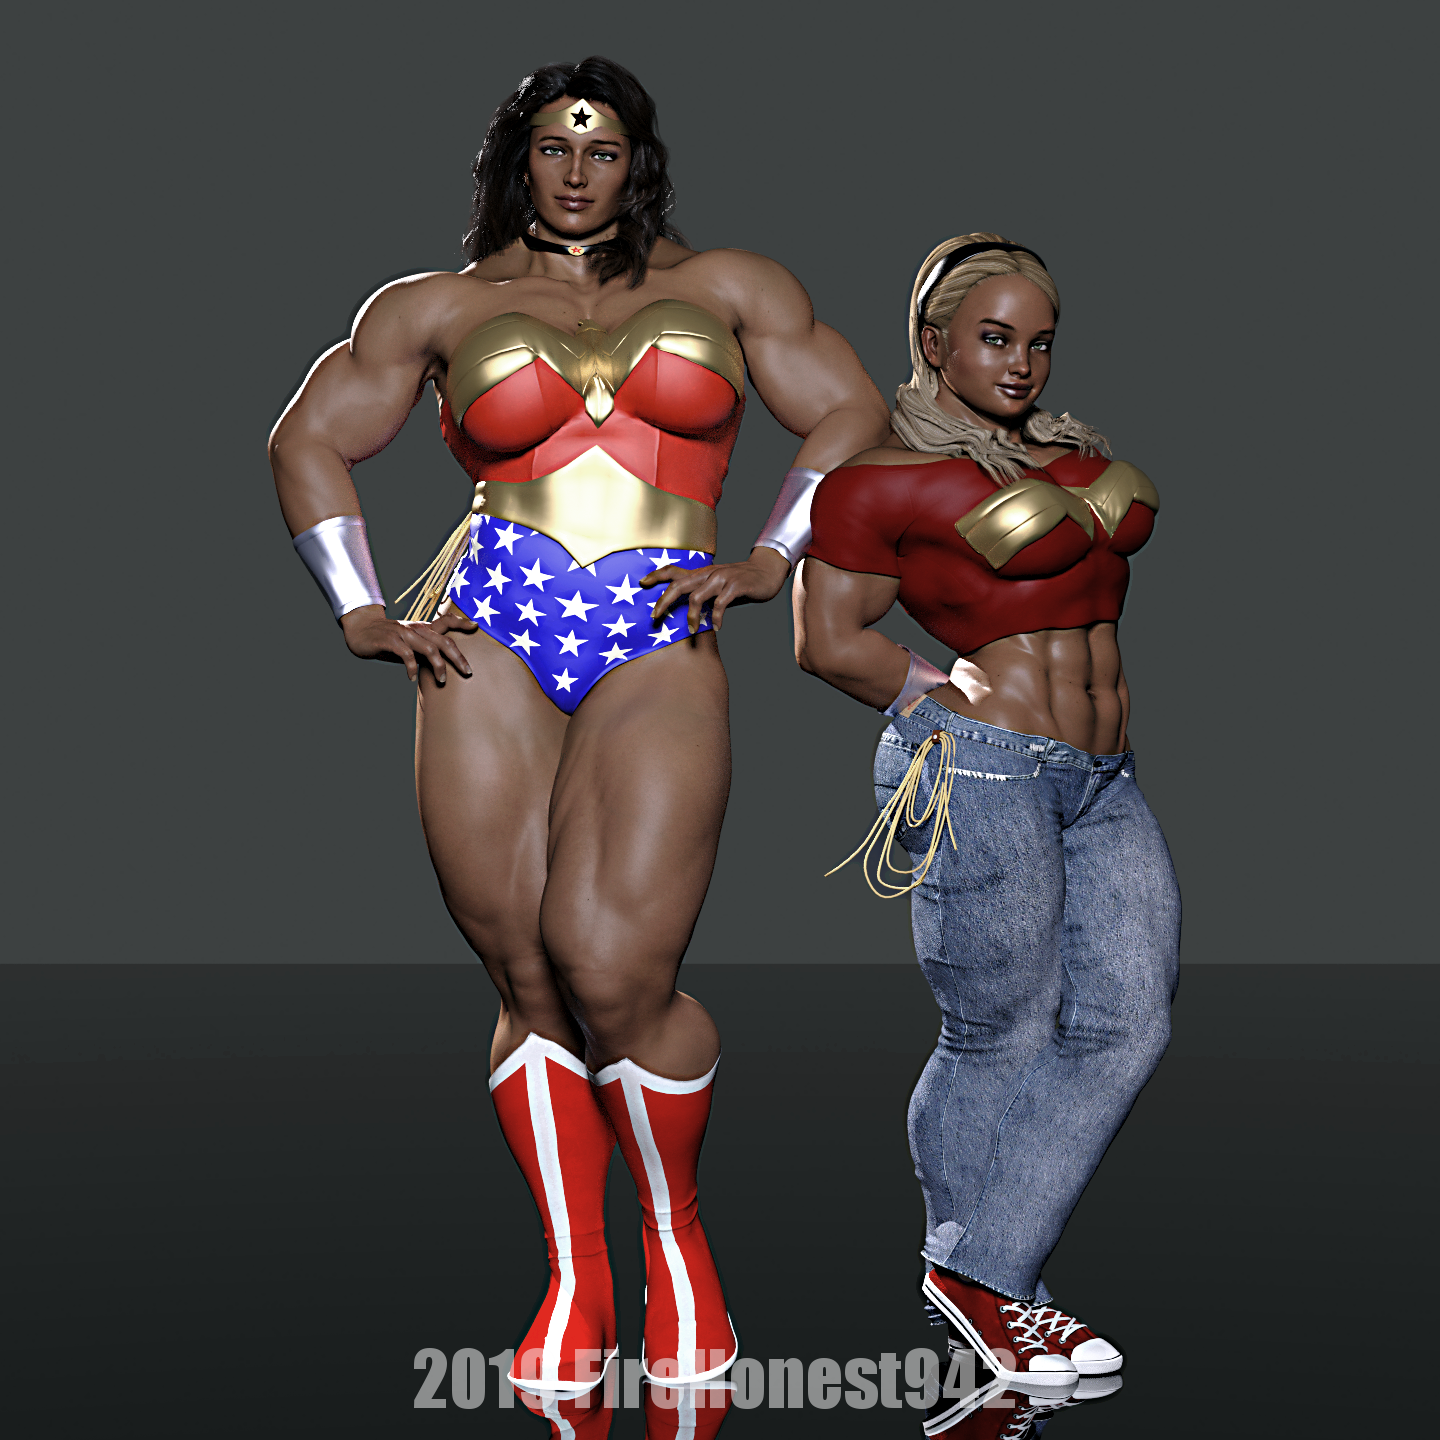 Wonder woman costume by Tallandstrong on DeviantArt